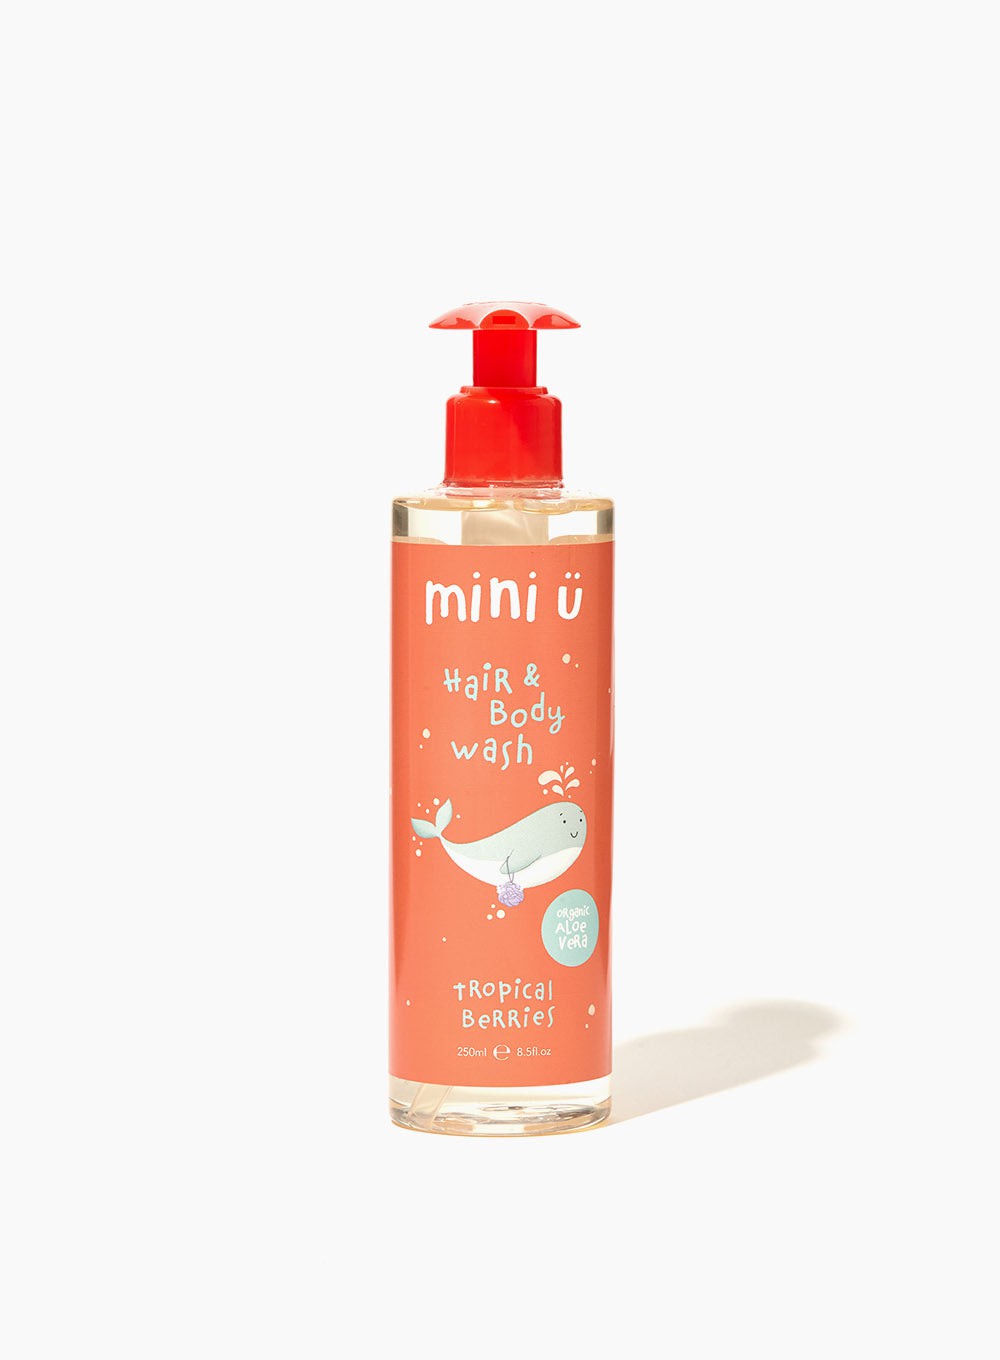 Mini U Hair Care Mini-U Tropical Berries Hair & Bodywash